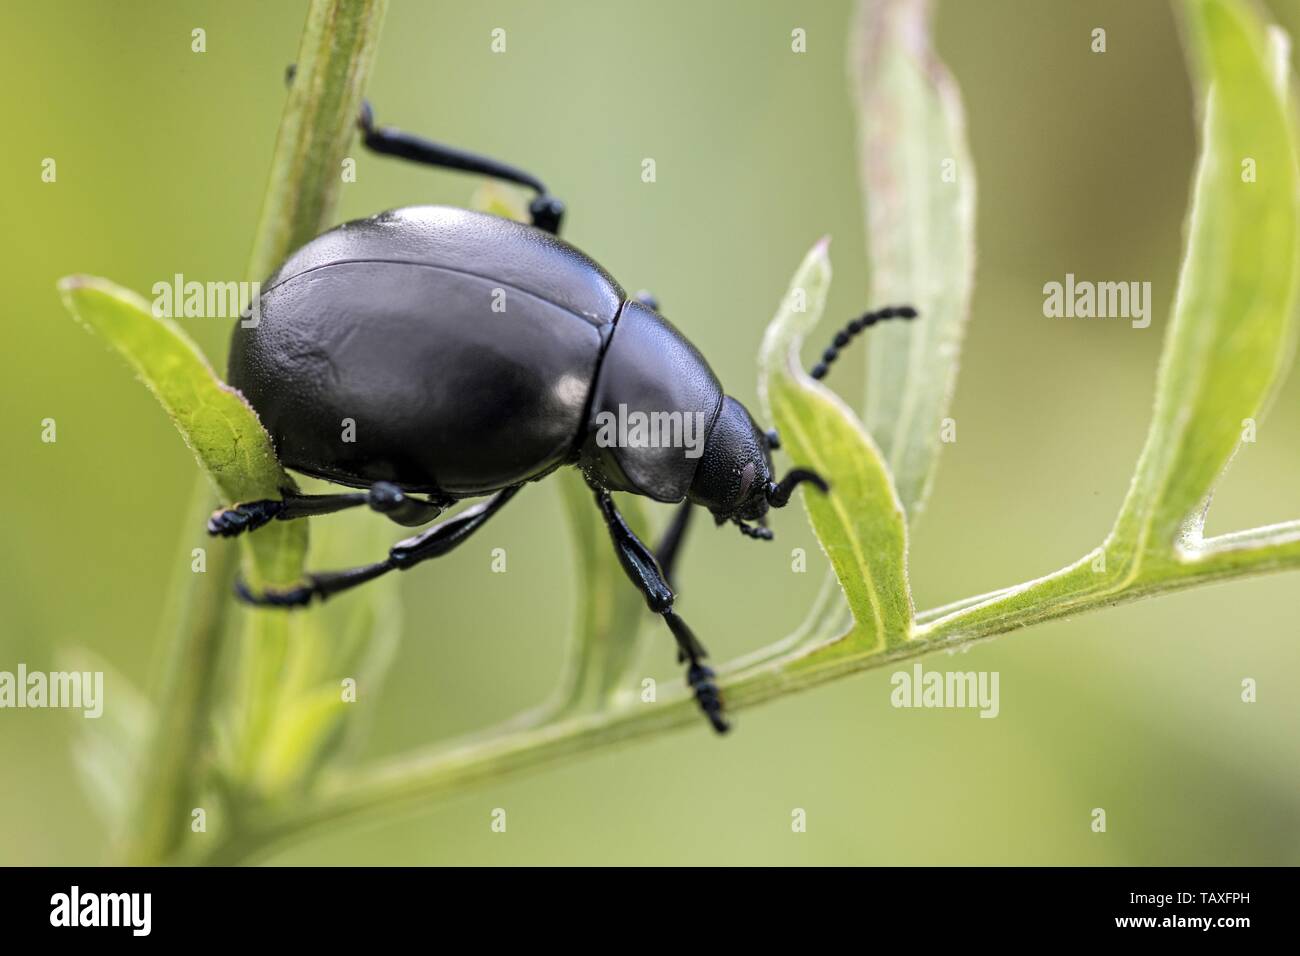 churchyard beetle Stock Photo